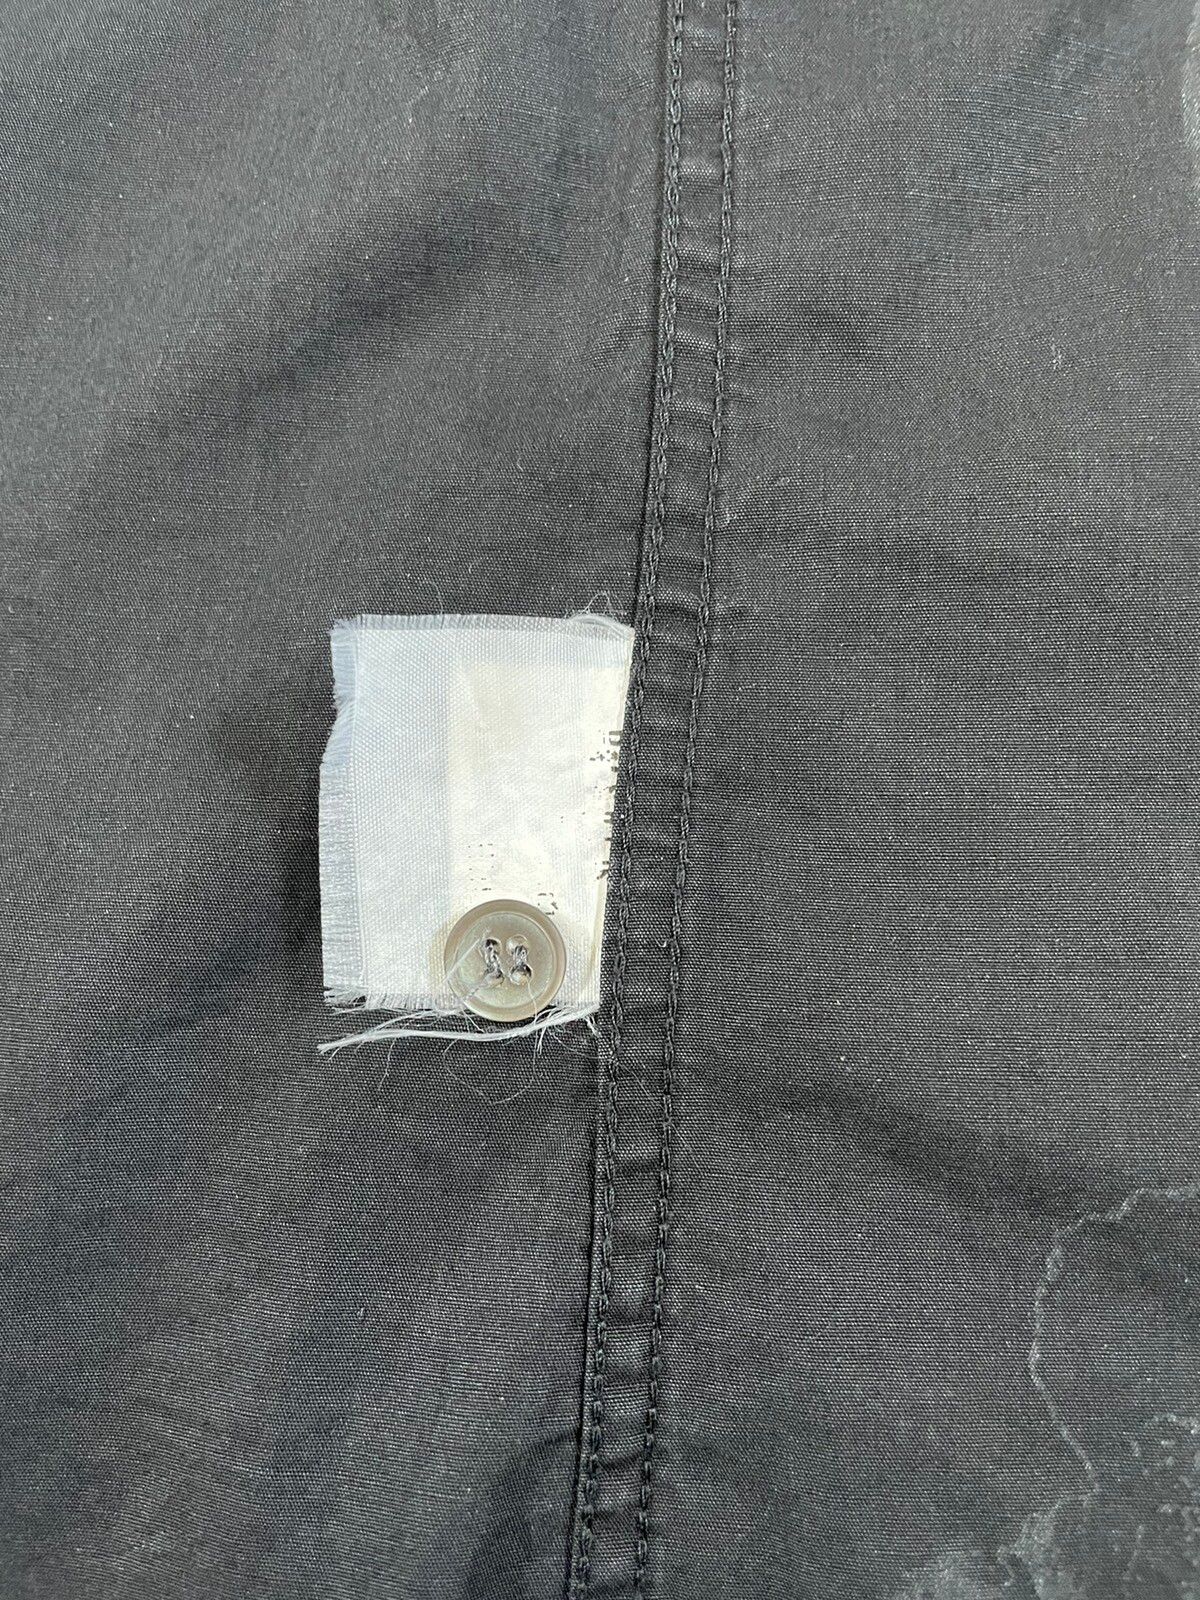 Raf Simons Raf Simons “Consumed” Button Up Shirt Size US S / EU 44-46 / 1 - 7 Thumbnail